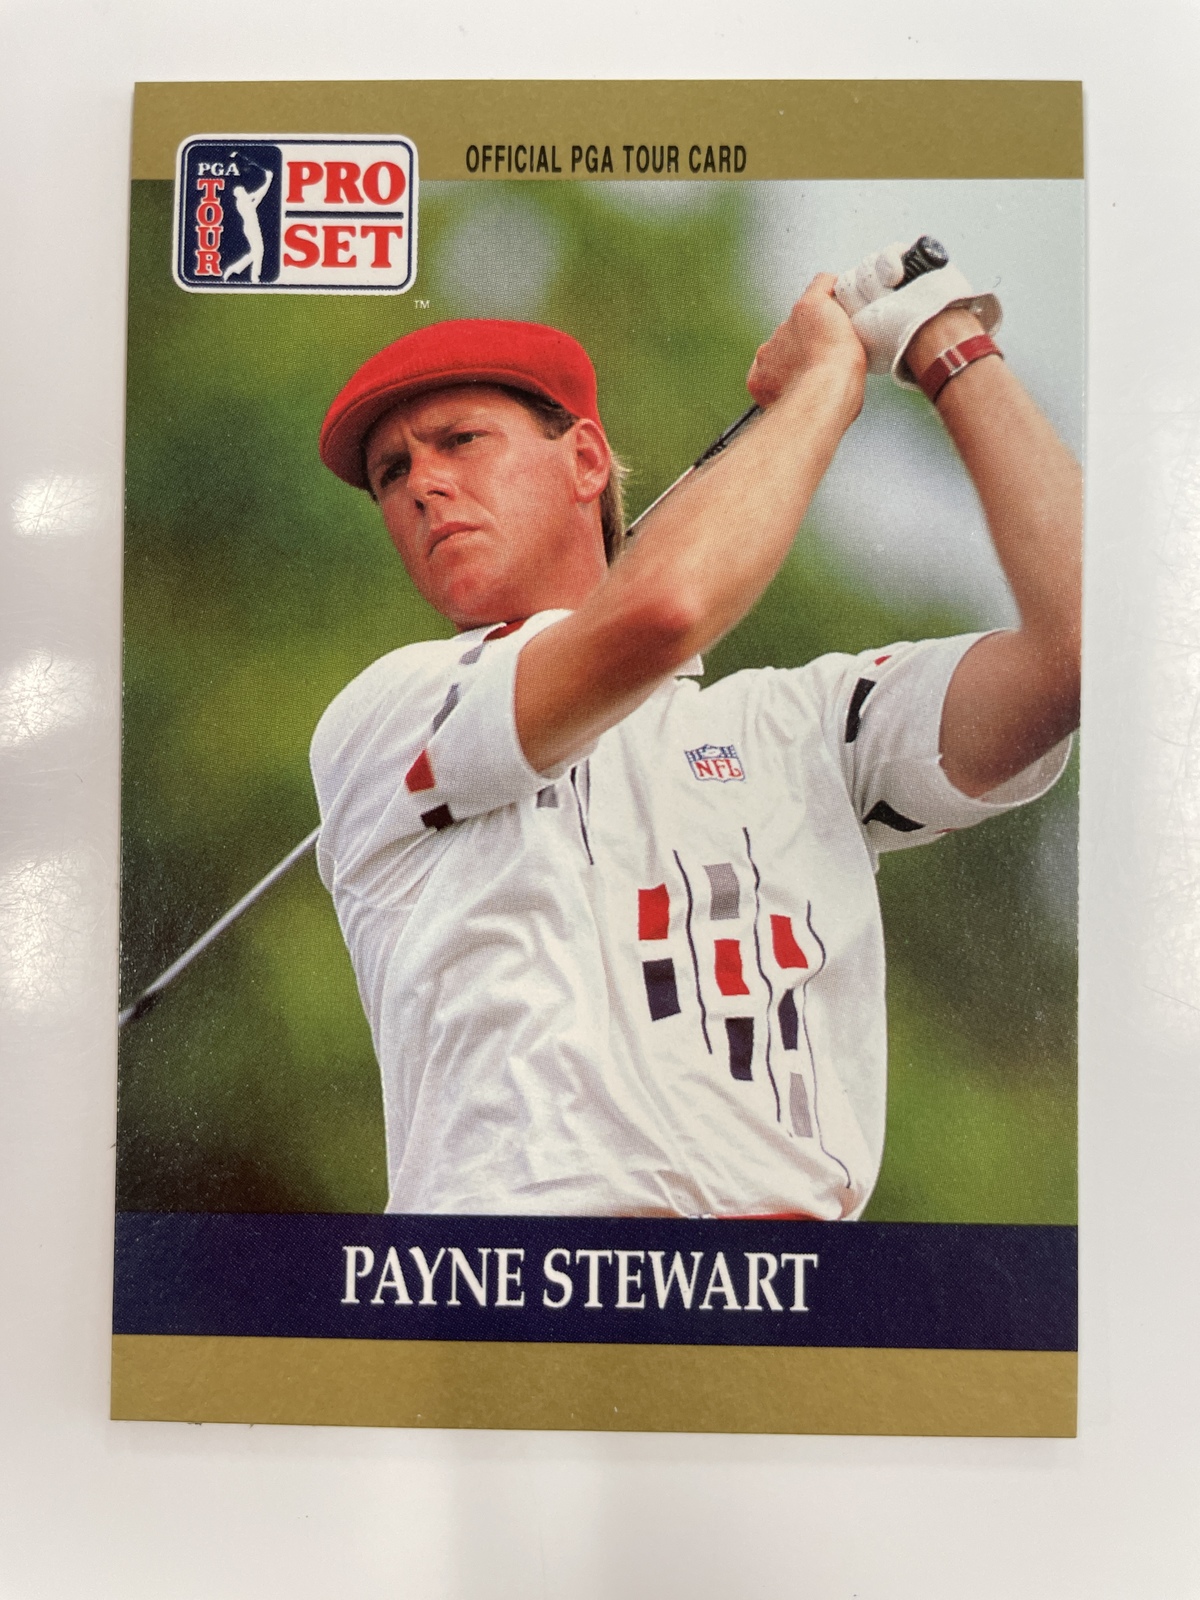 Payne Stewart Official PGA Tour Card and similar items